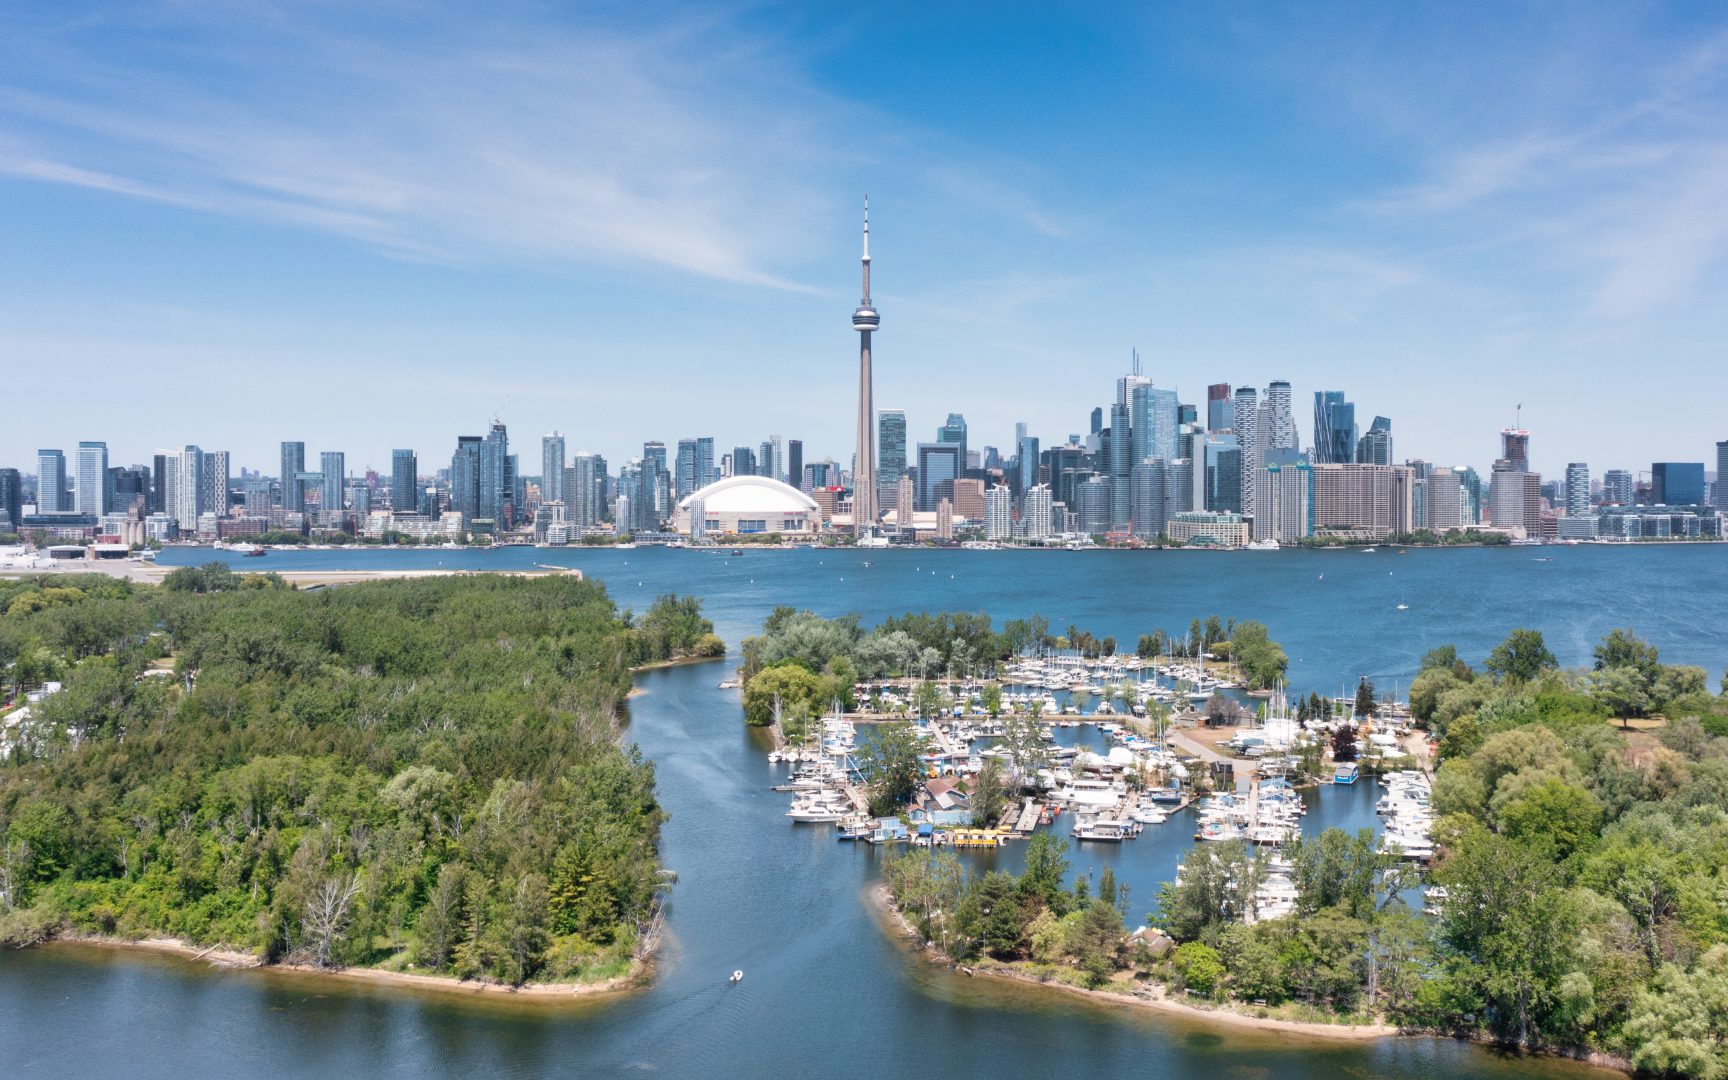 Toronto Islands - A Neighbourhood Guide by SHANE